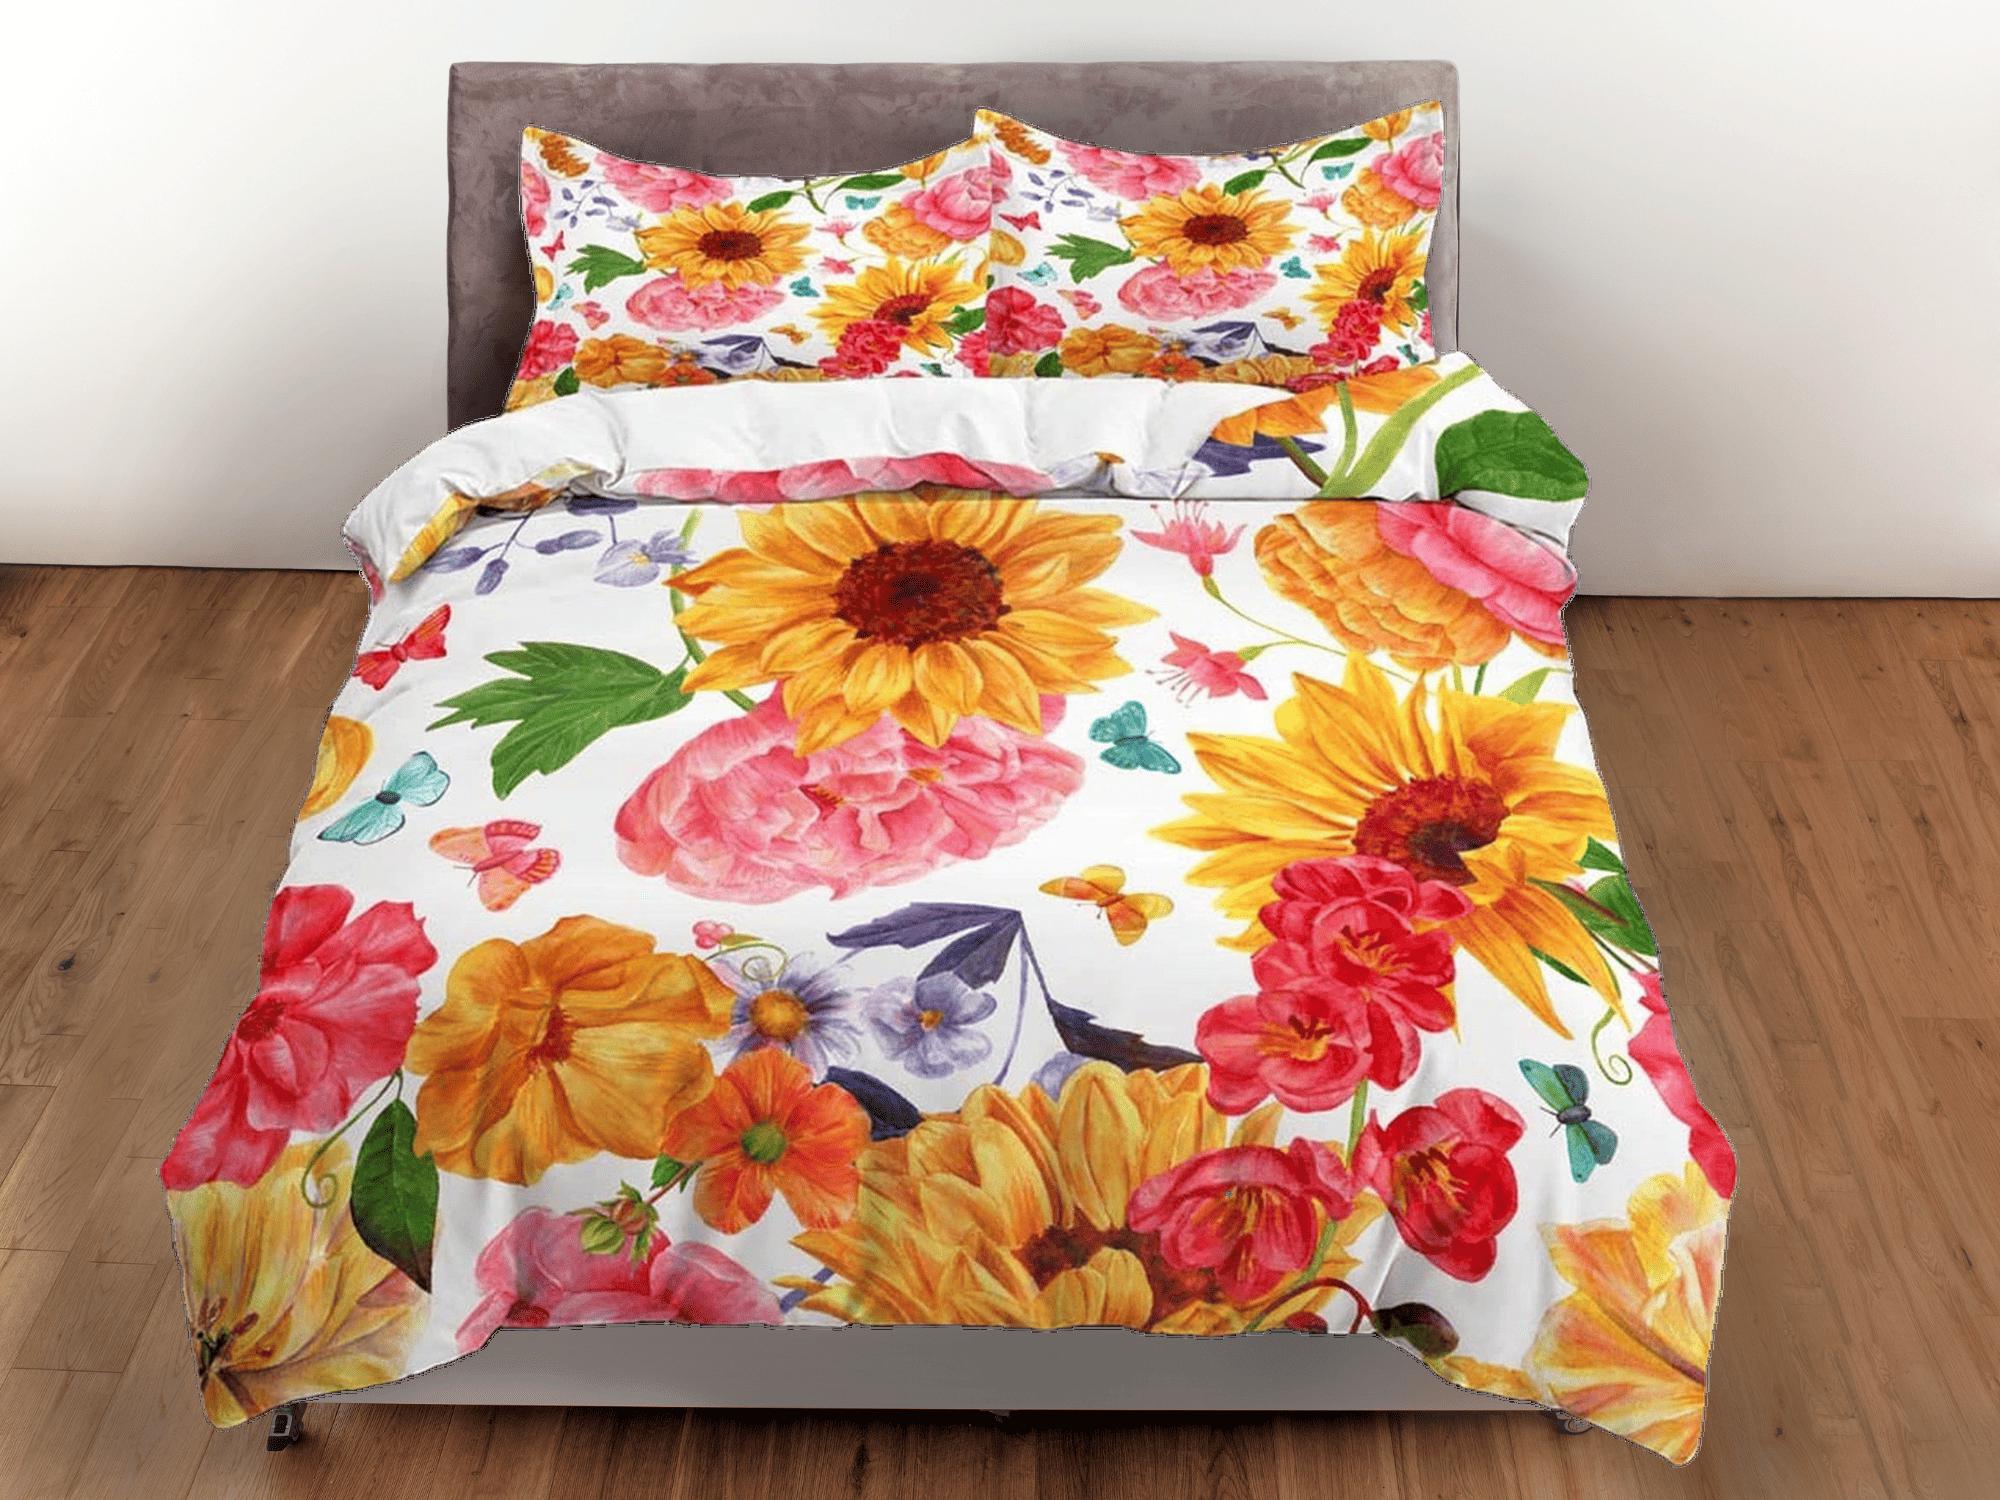 daintyduvet Summer sunflower floral duvet cover colorful bedding, teen girl bedroom, baby girl crib bedding boho maximalist bedspread aesthetic bedding